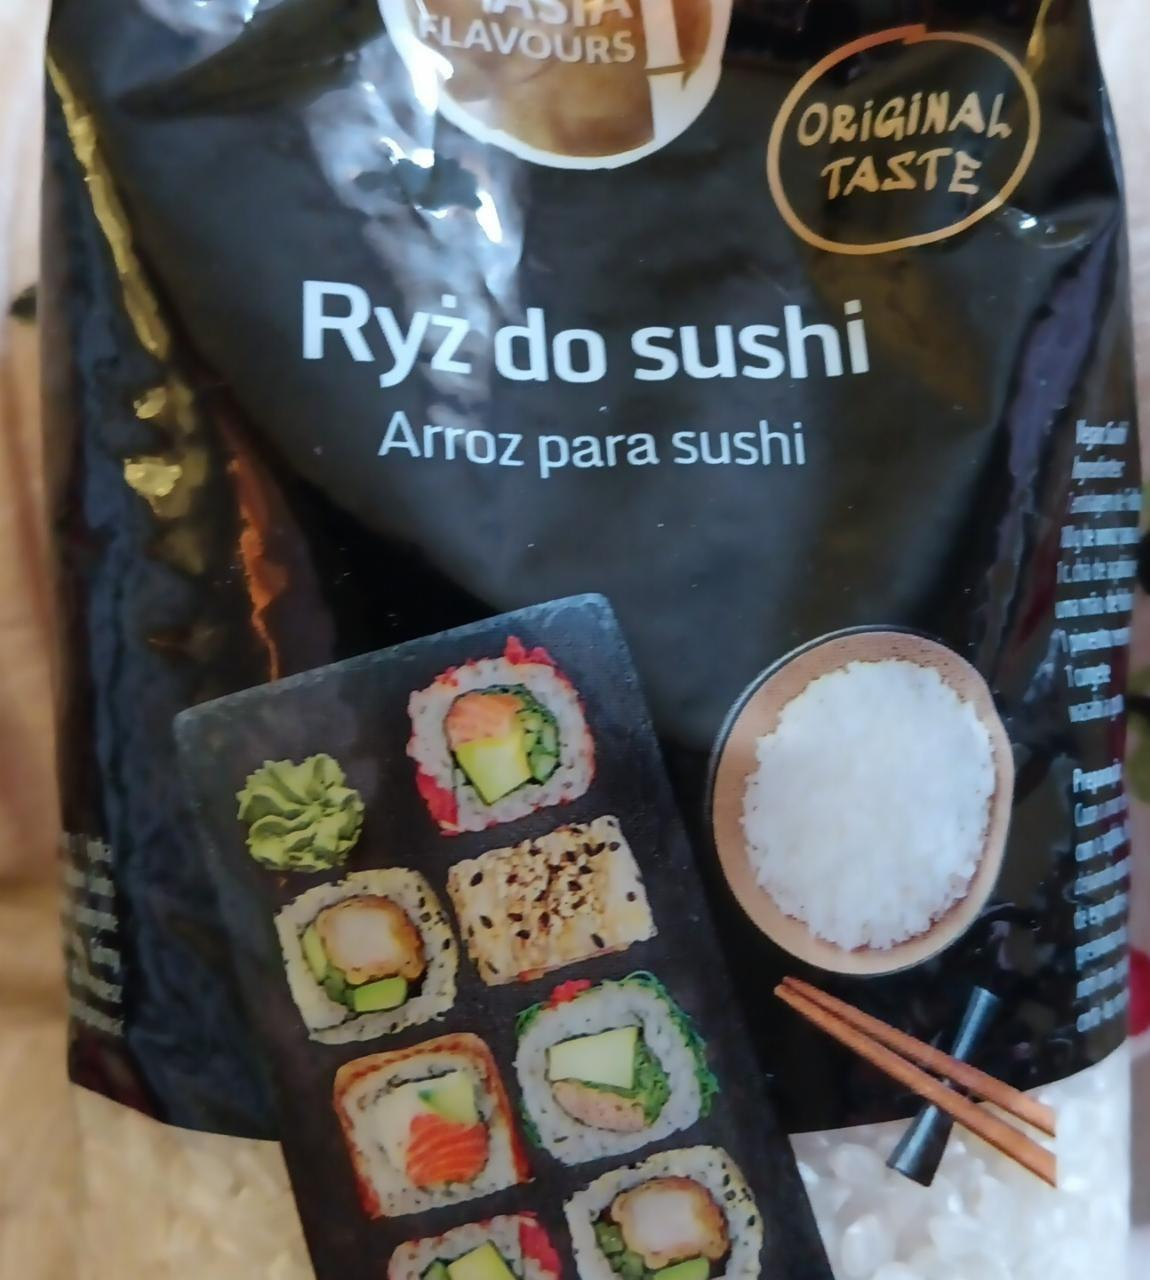 Fotografie - Ryż do sushi Asia Flavours